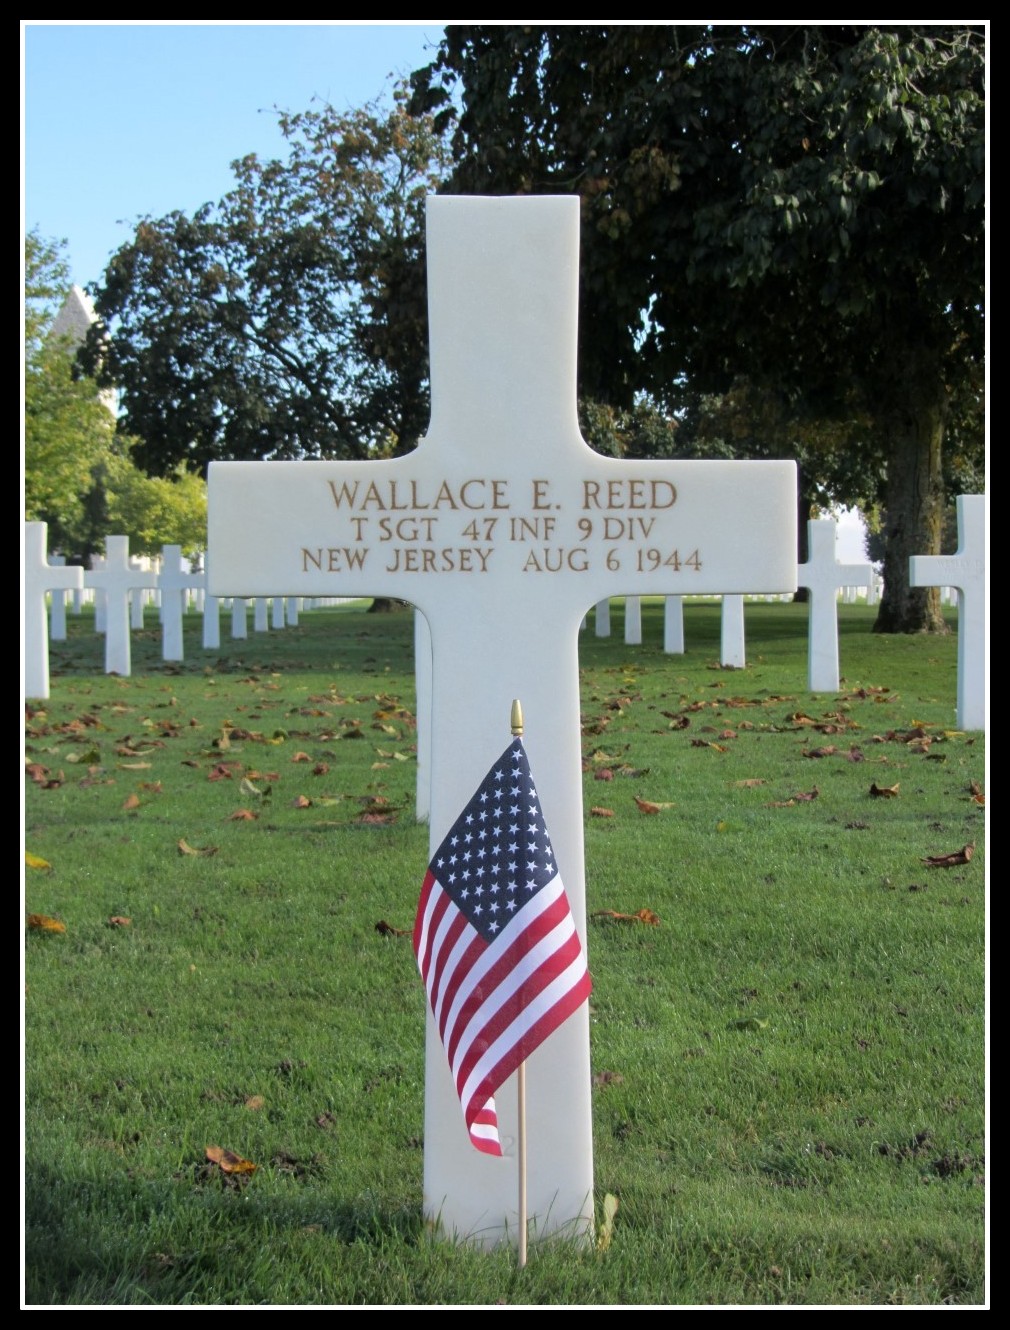 T/Sgt. Wallace E. Reed of Nutley/Belleville, N.J., was KIA Aug. 6, 1944